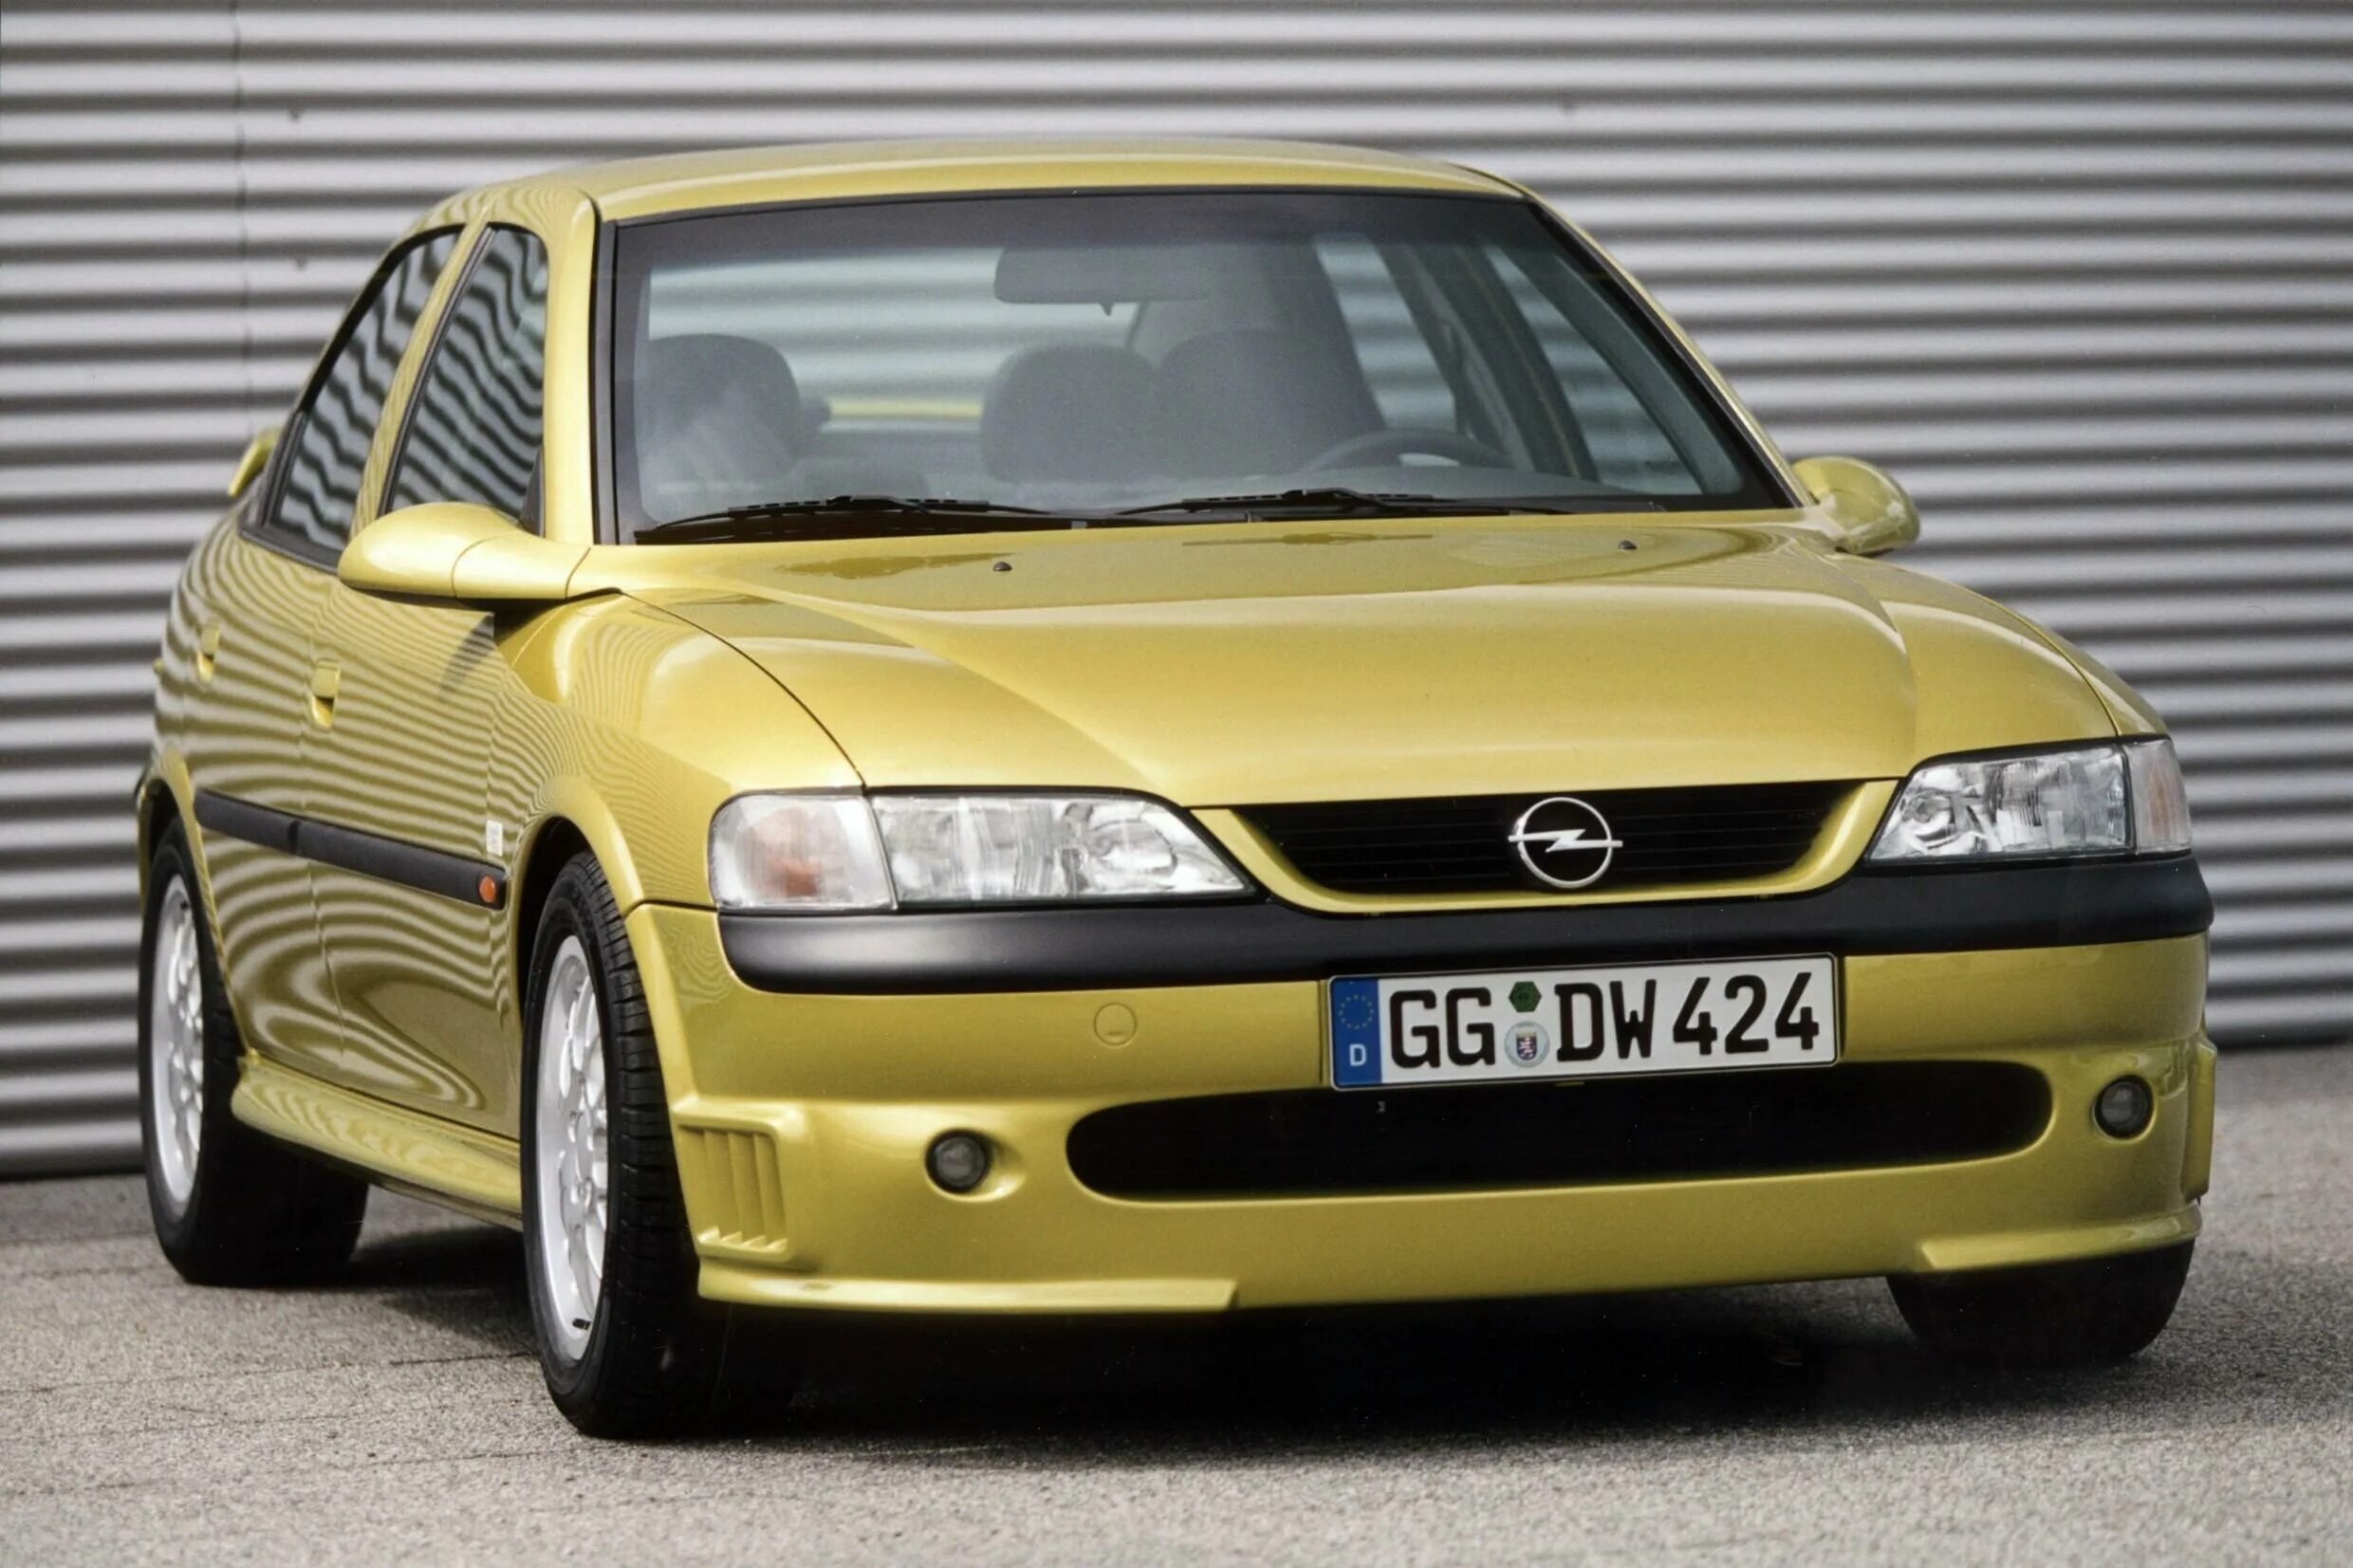 Opel Vectra b 1.6. Опель Вектра б i500. Opel Vectra 1.8. Opel Vectra b 1997 1.6. Опель вектра б отзывы